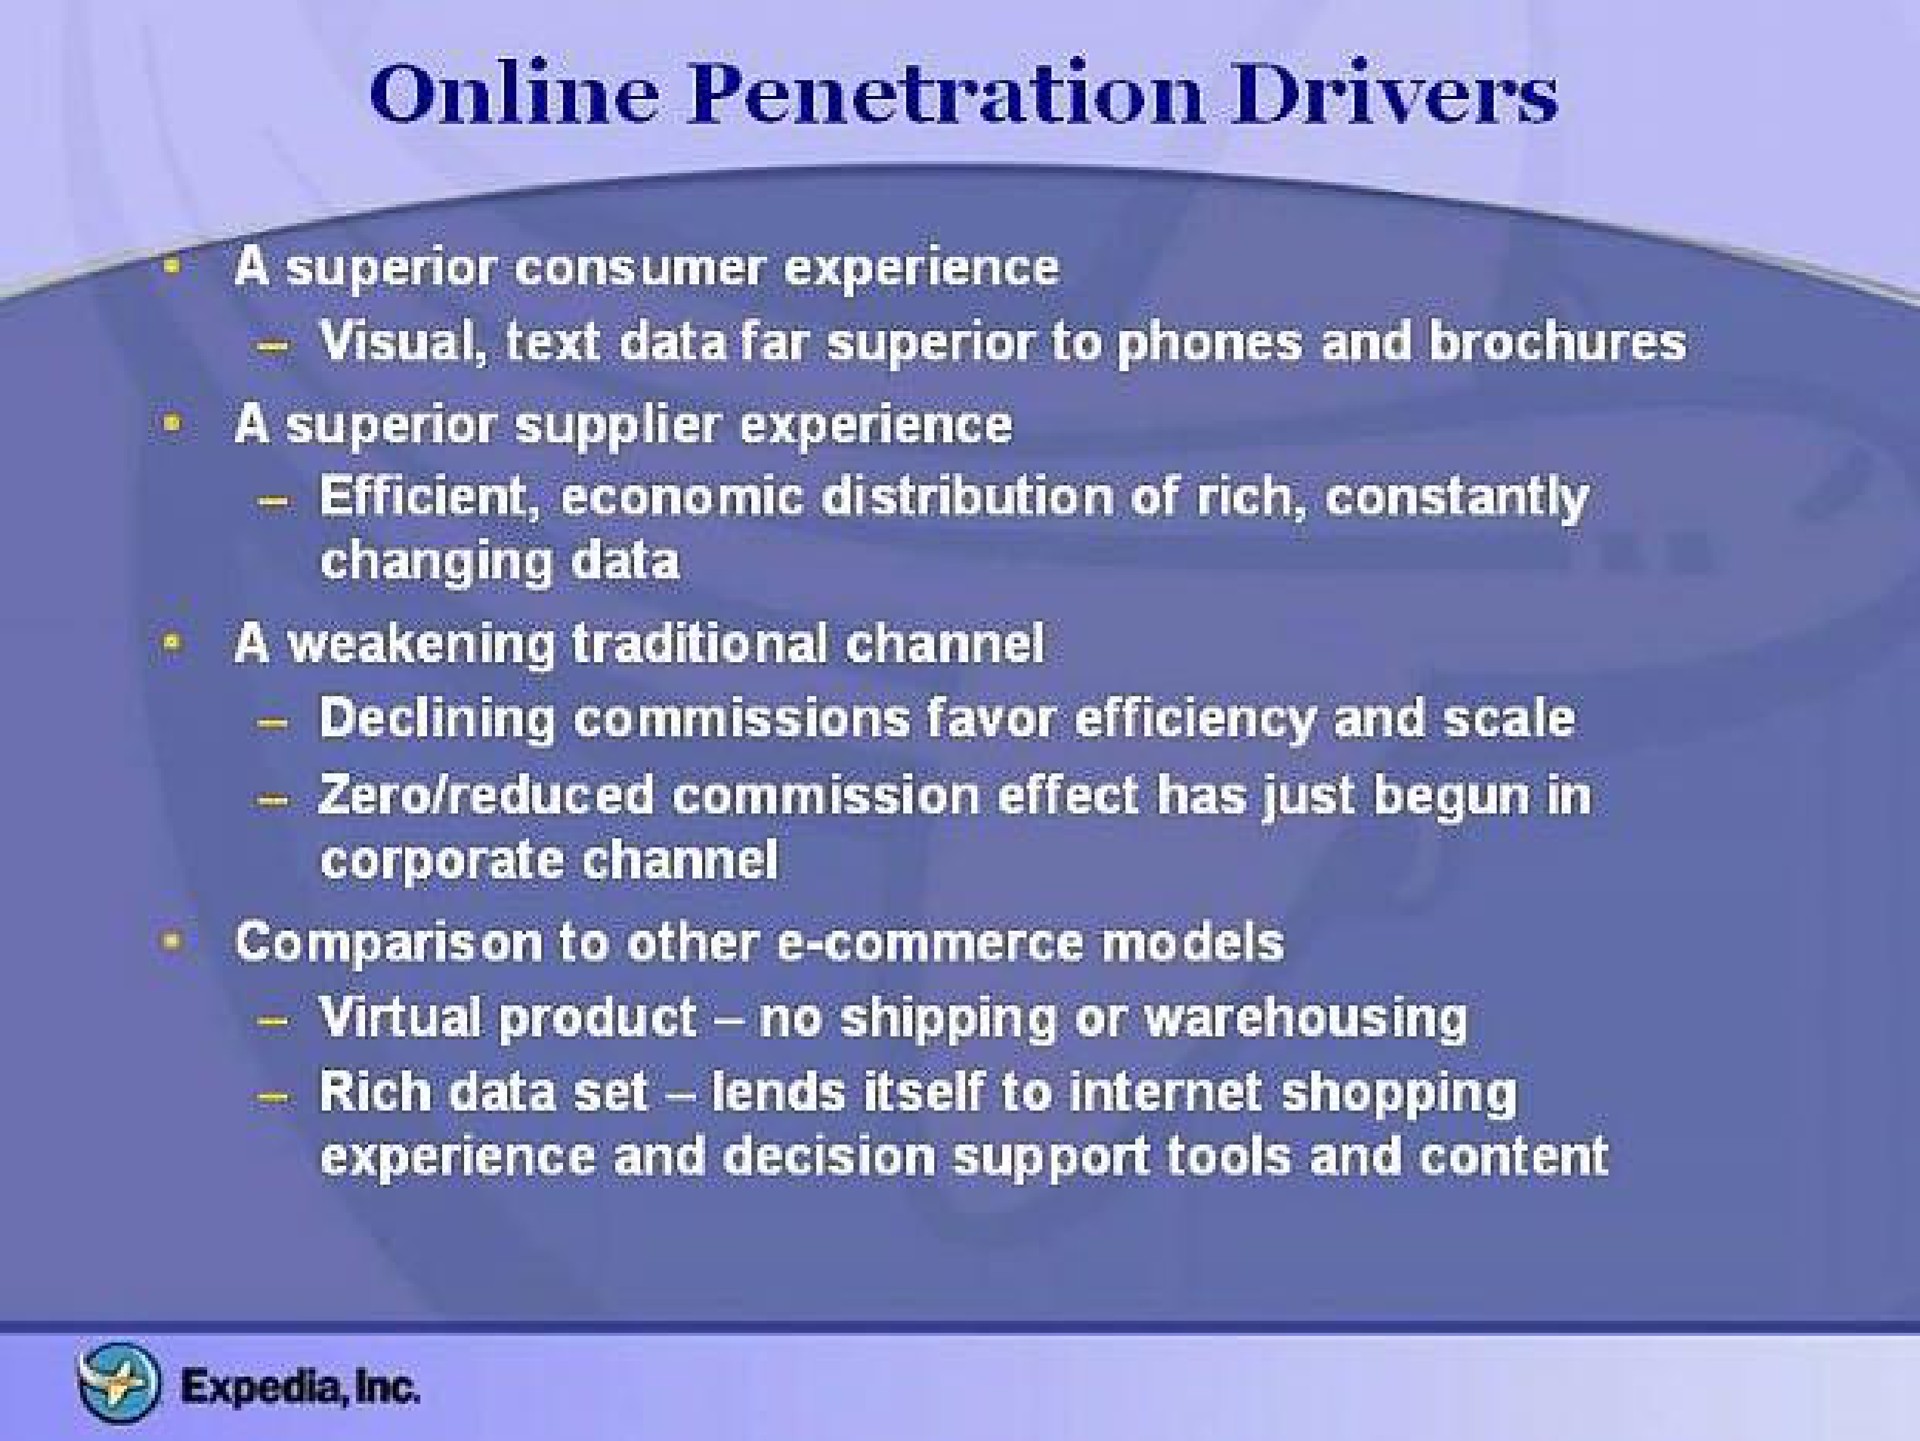 penetration drivers | Expedia